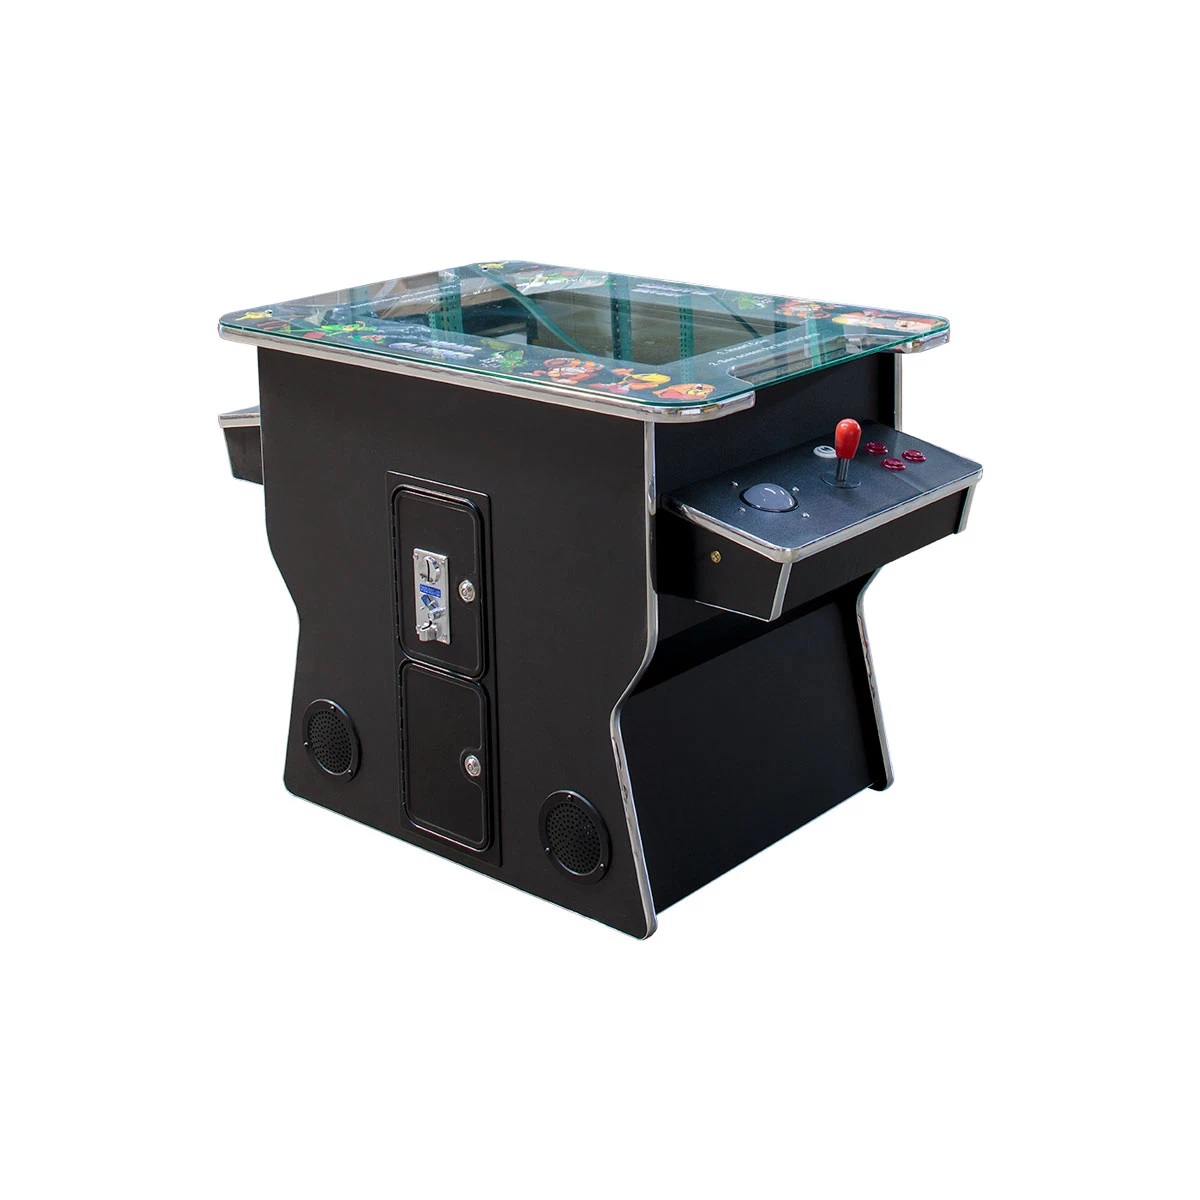 Jamma Arcade Machine Cocktail Table516 Retro Arcade GamesMultigame Theme 